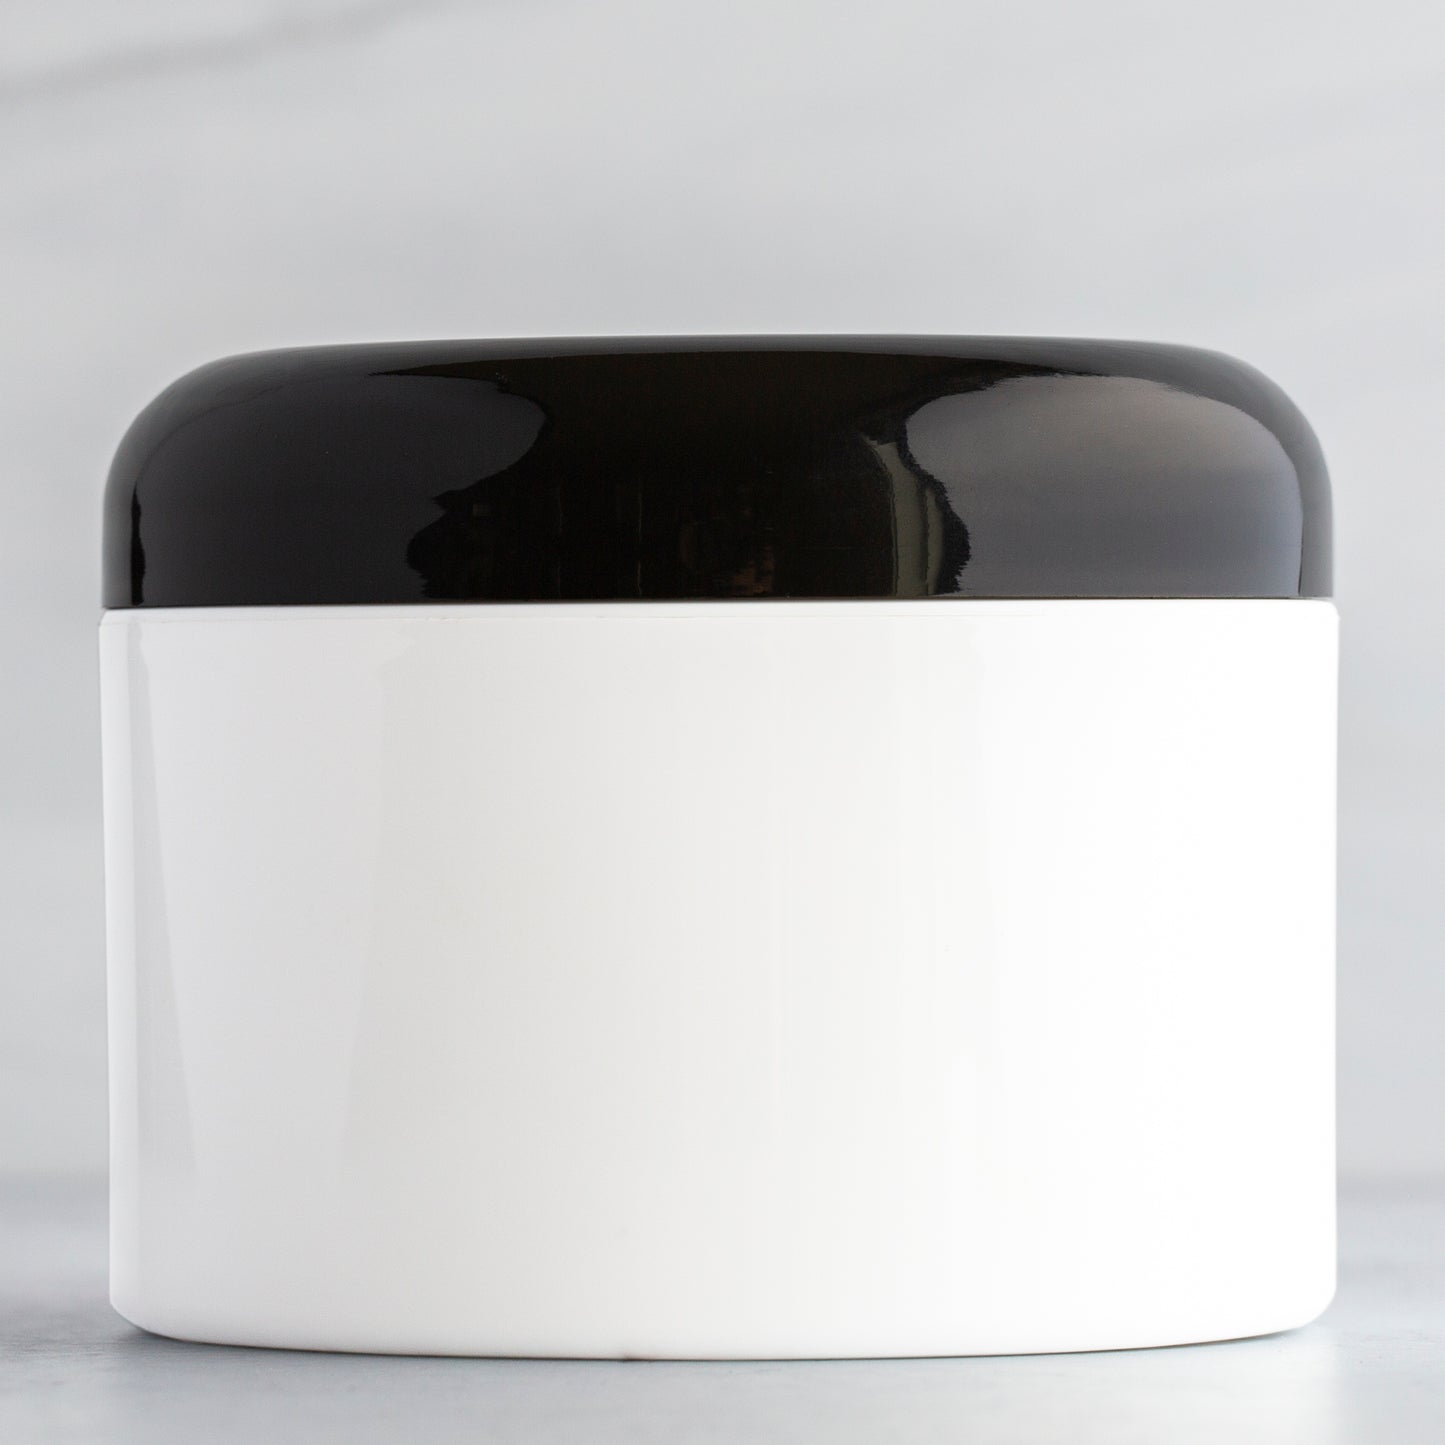 8 oz White Square Base Plastic Jar with Black Dome Cap